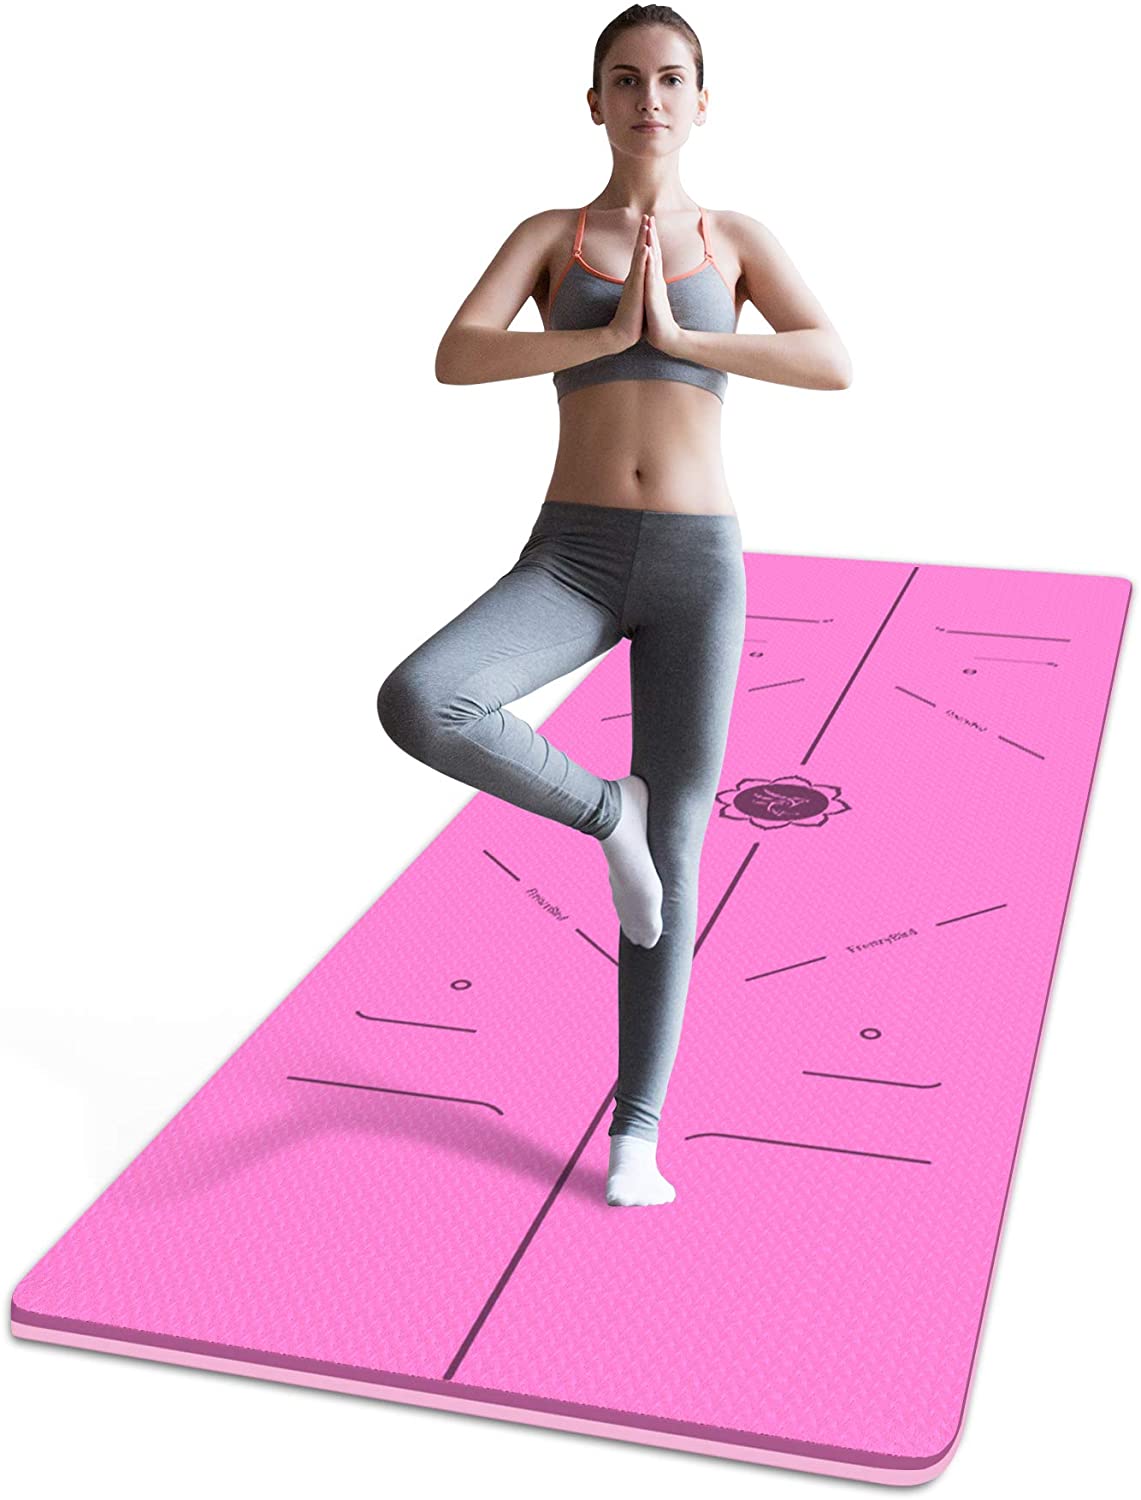 Non-slip portable yoga mat with Flamingo or Floral design - lotsofyoga